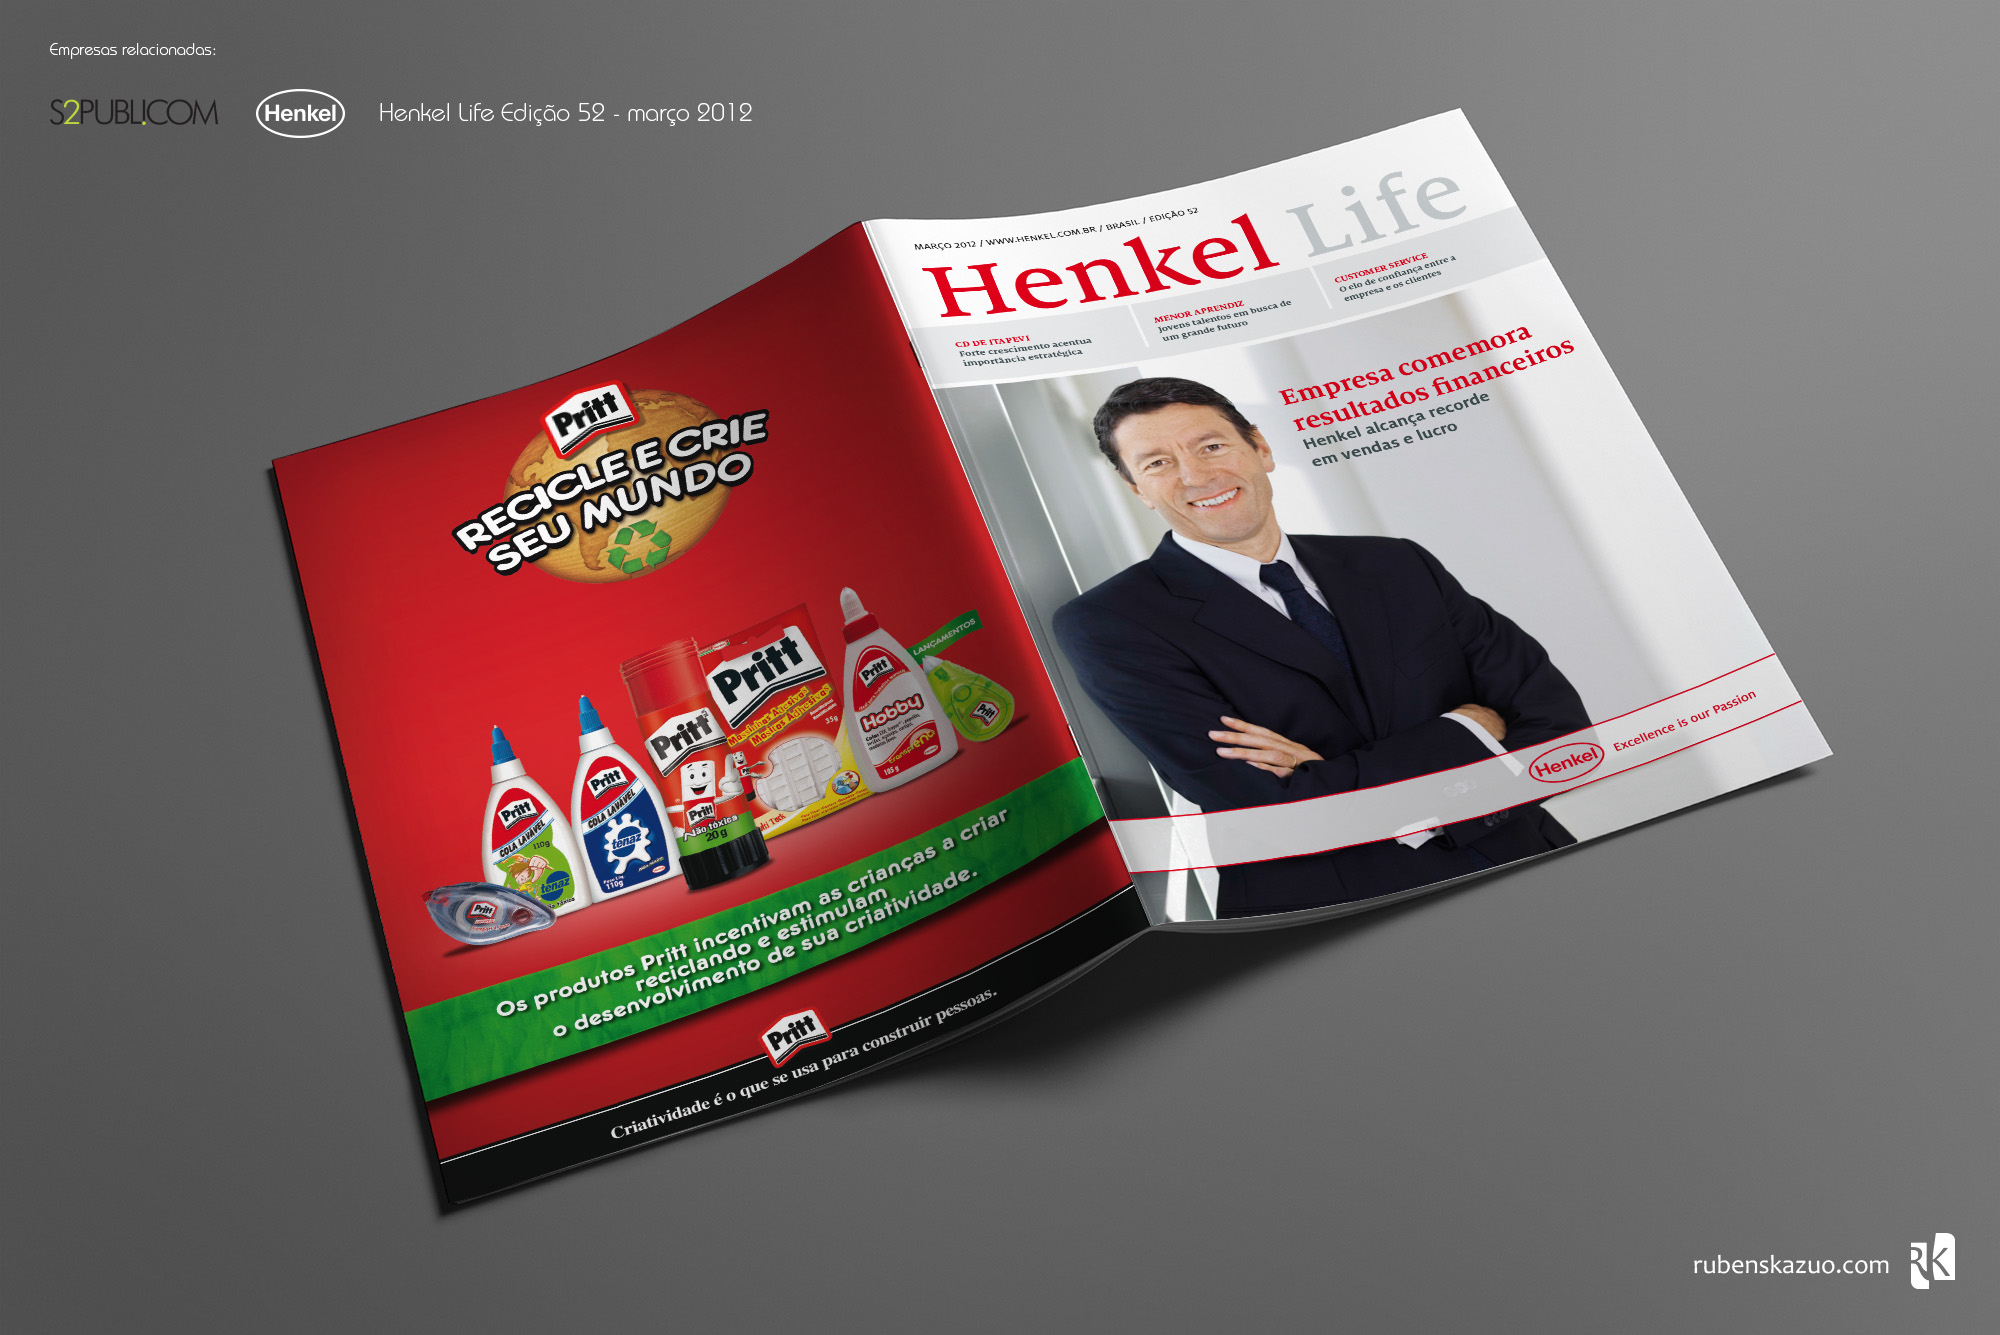 Henkel Life Ed 52